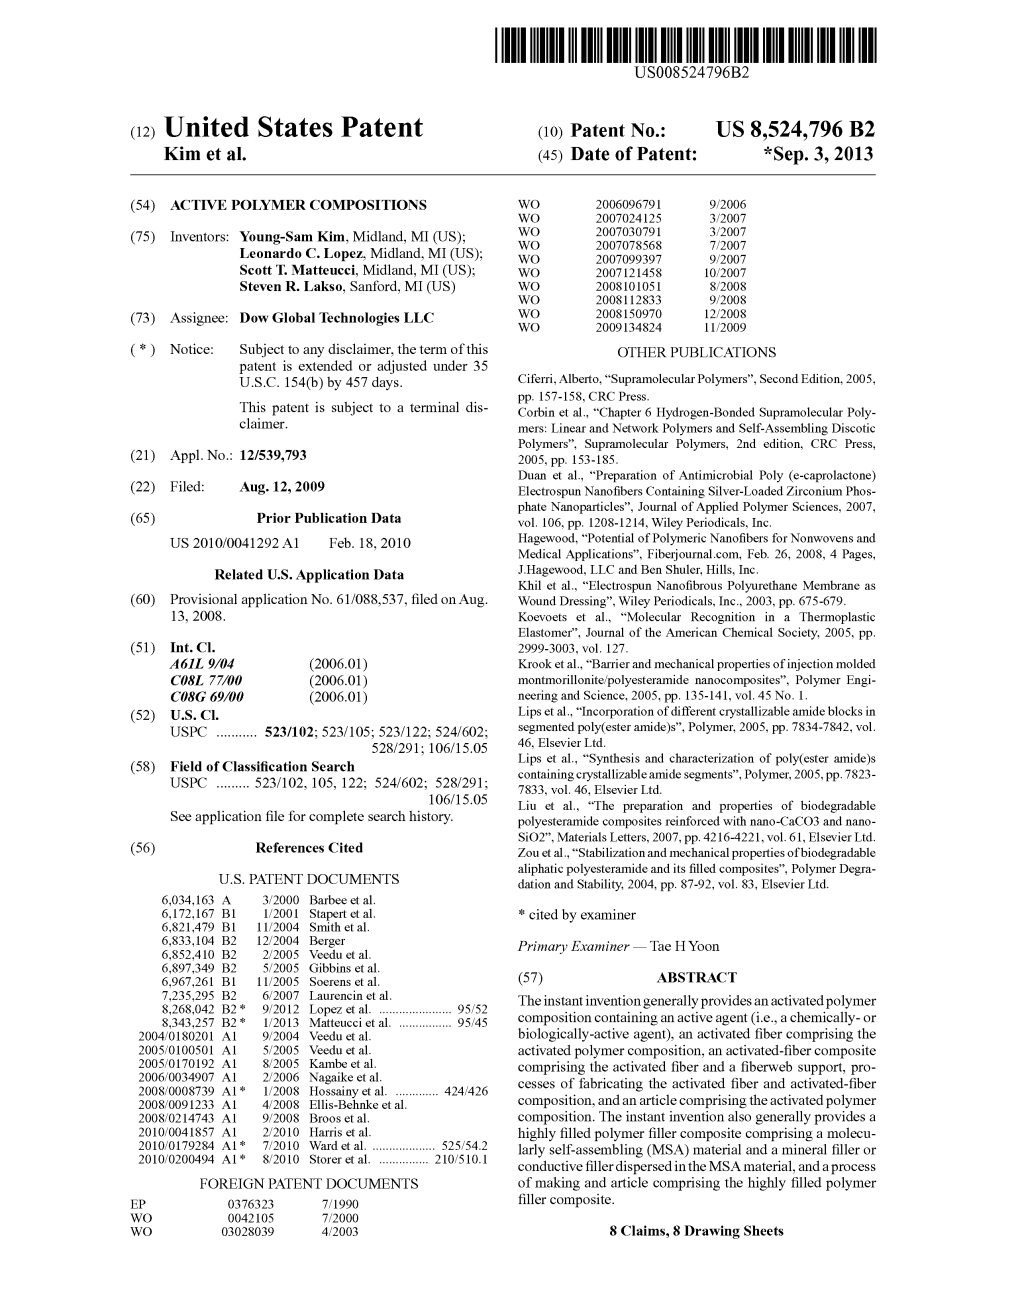 (12) United States Patent (10) Patent No.: US 8,524,796 B2 Kim Et Al